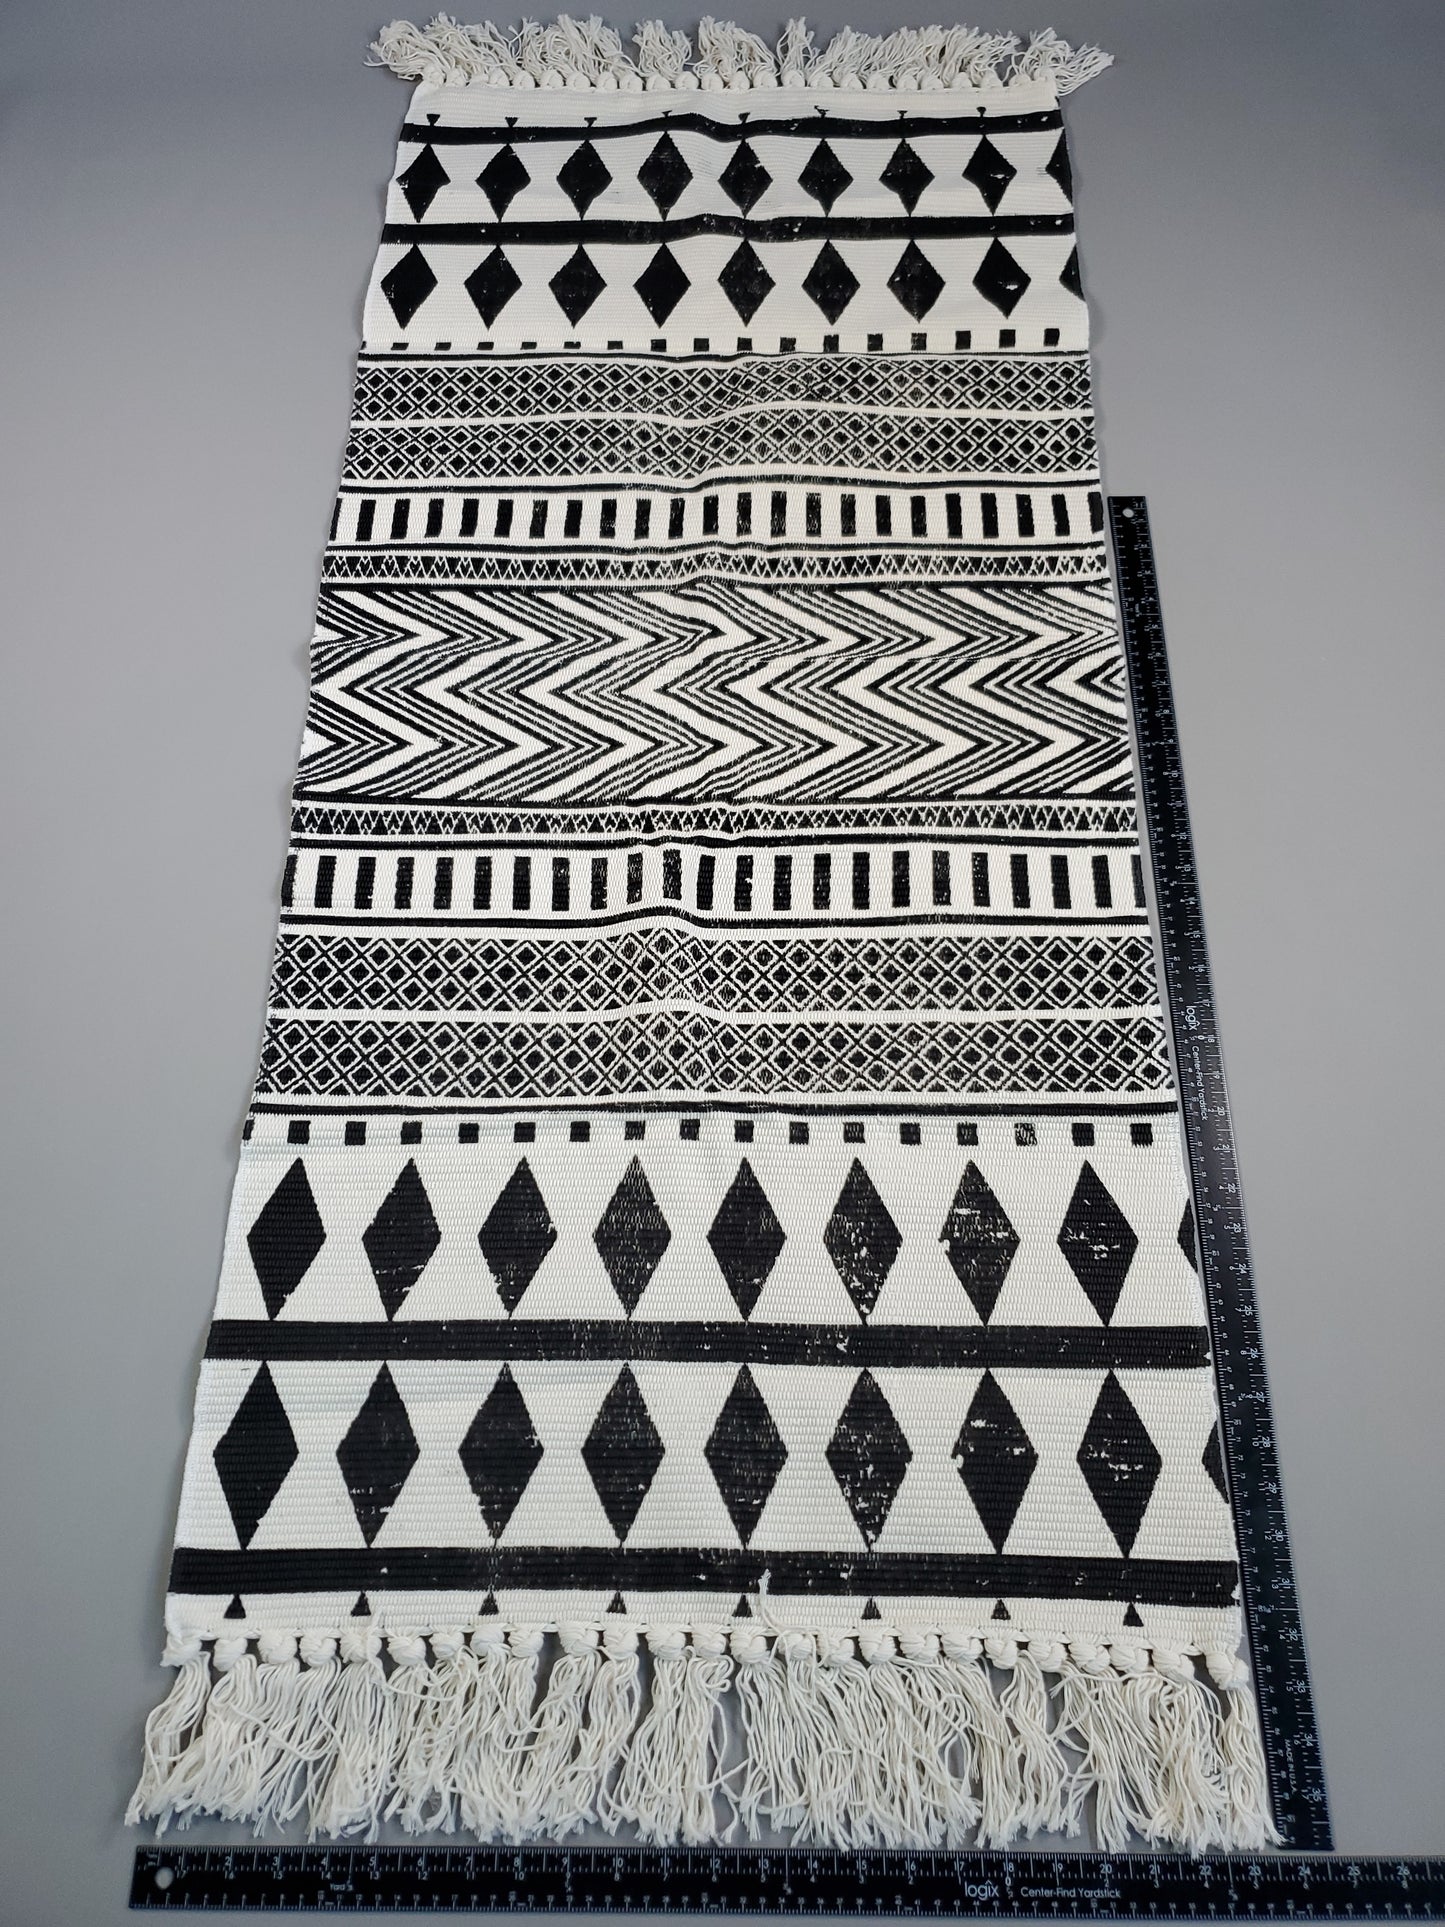 USTIDE Cotton Tassel Kilim Carpet Indian Hand Woven Braided Rug 2'x4'3" Black/Cream (New)